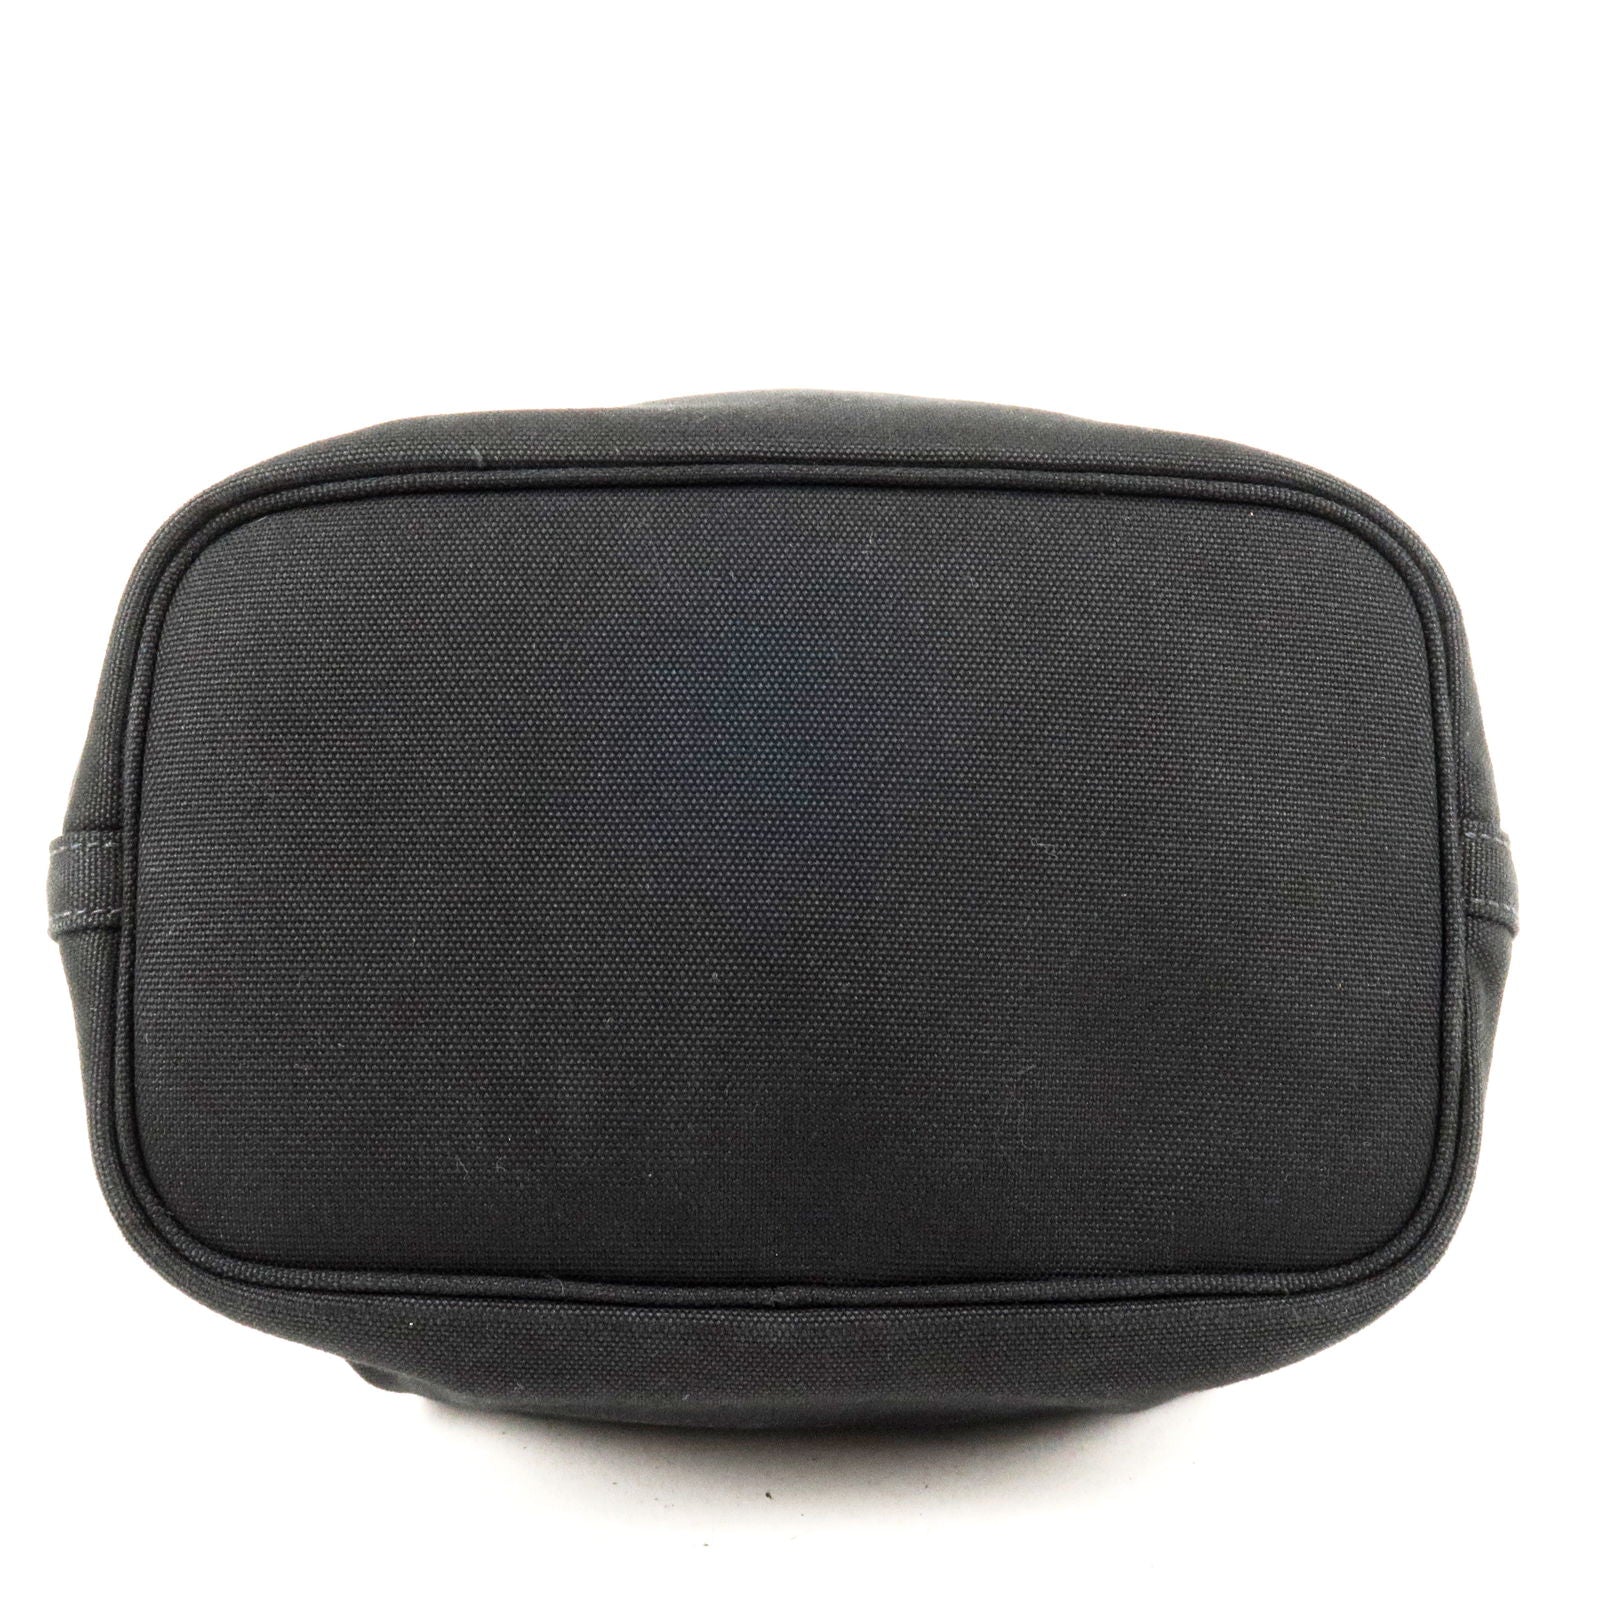 Leather - Shoulder - 1BE032 – dct - PRADA - Bag - Prada wavy